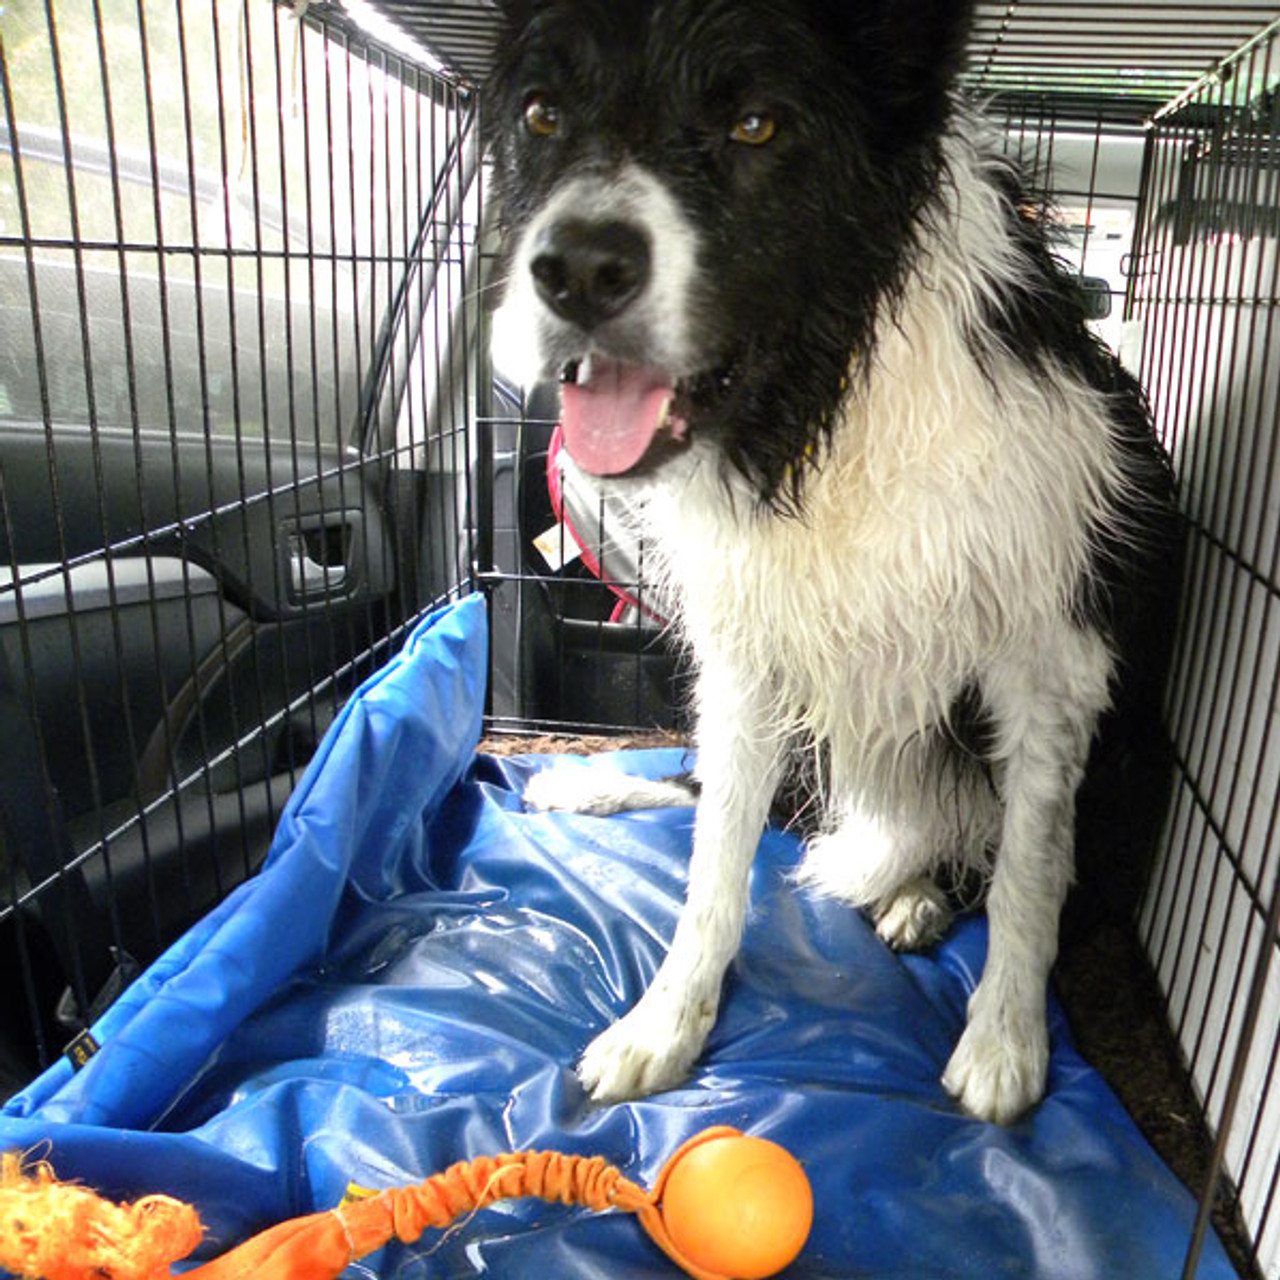 waterproof dog crate bed